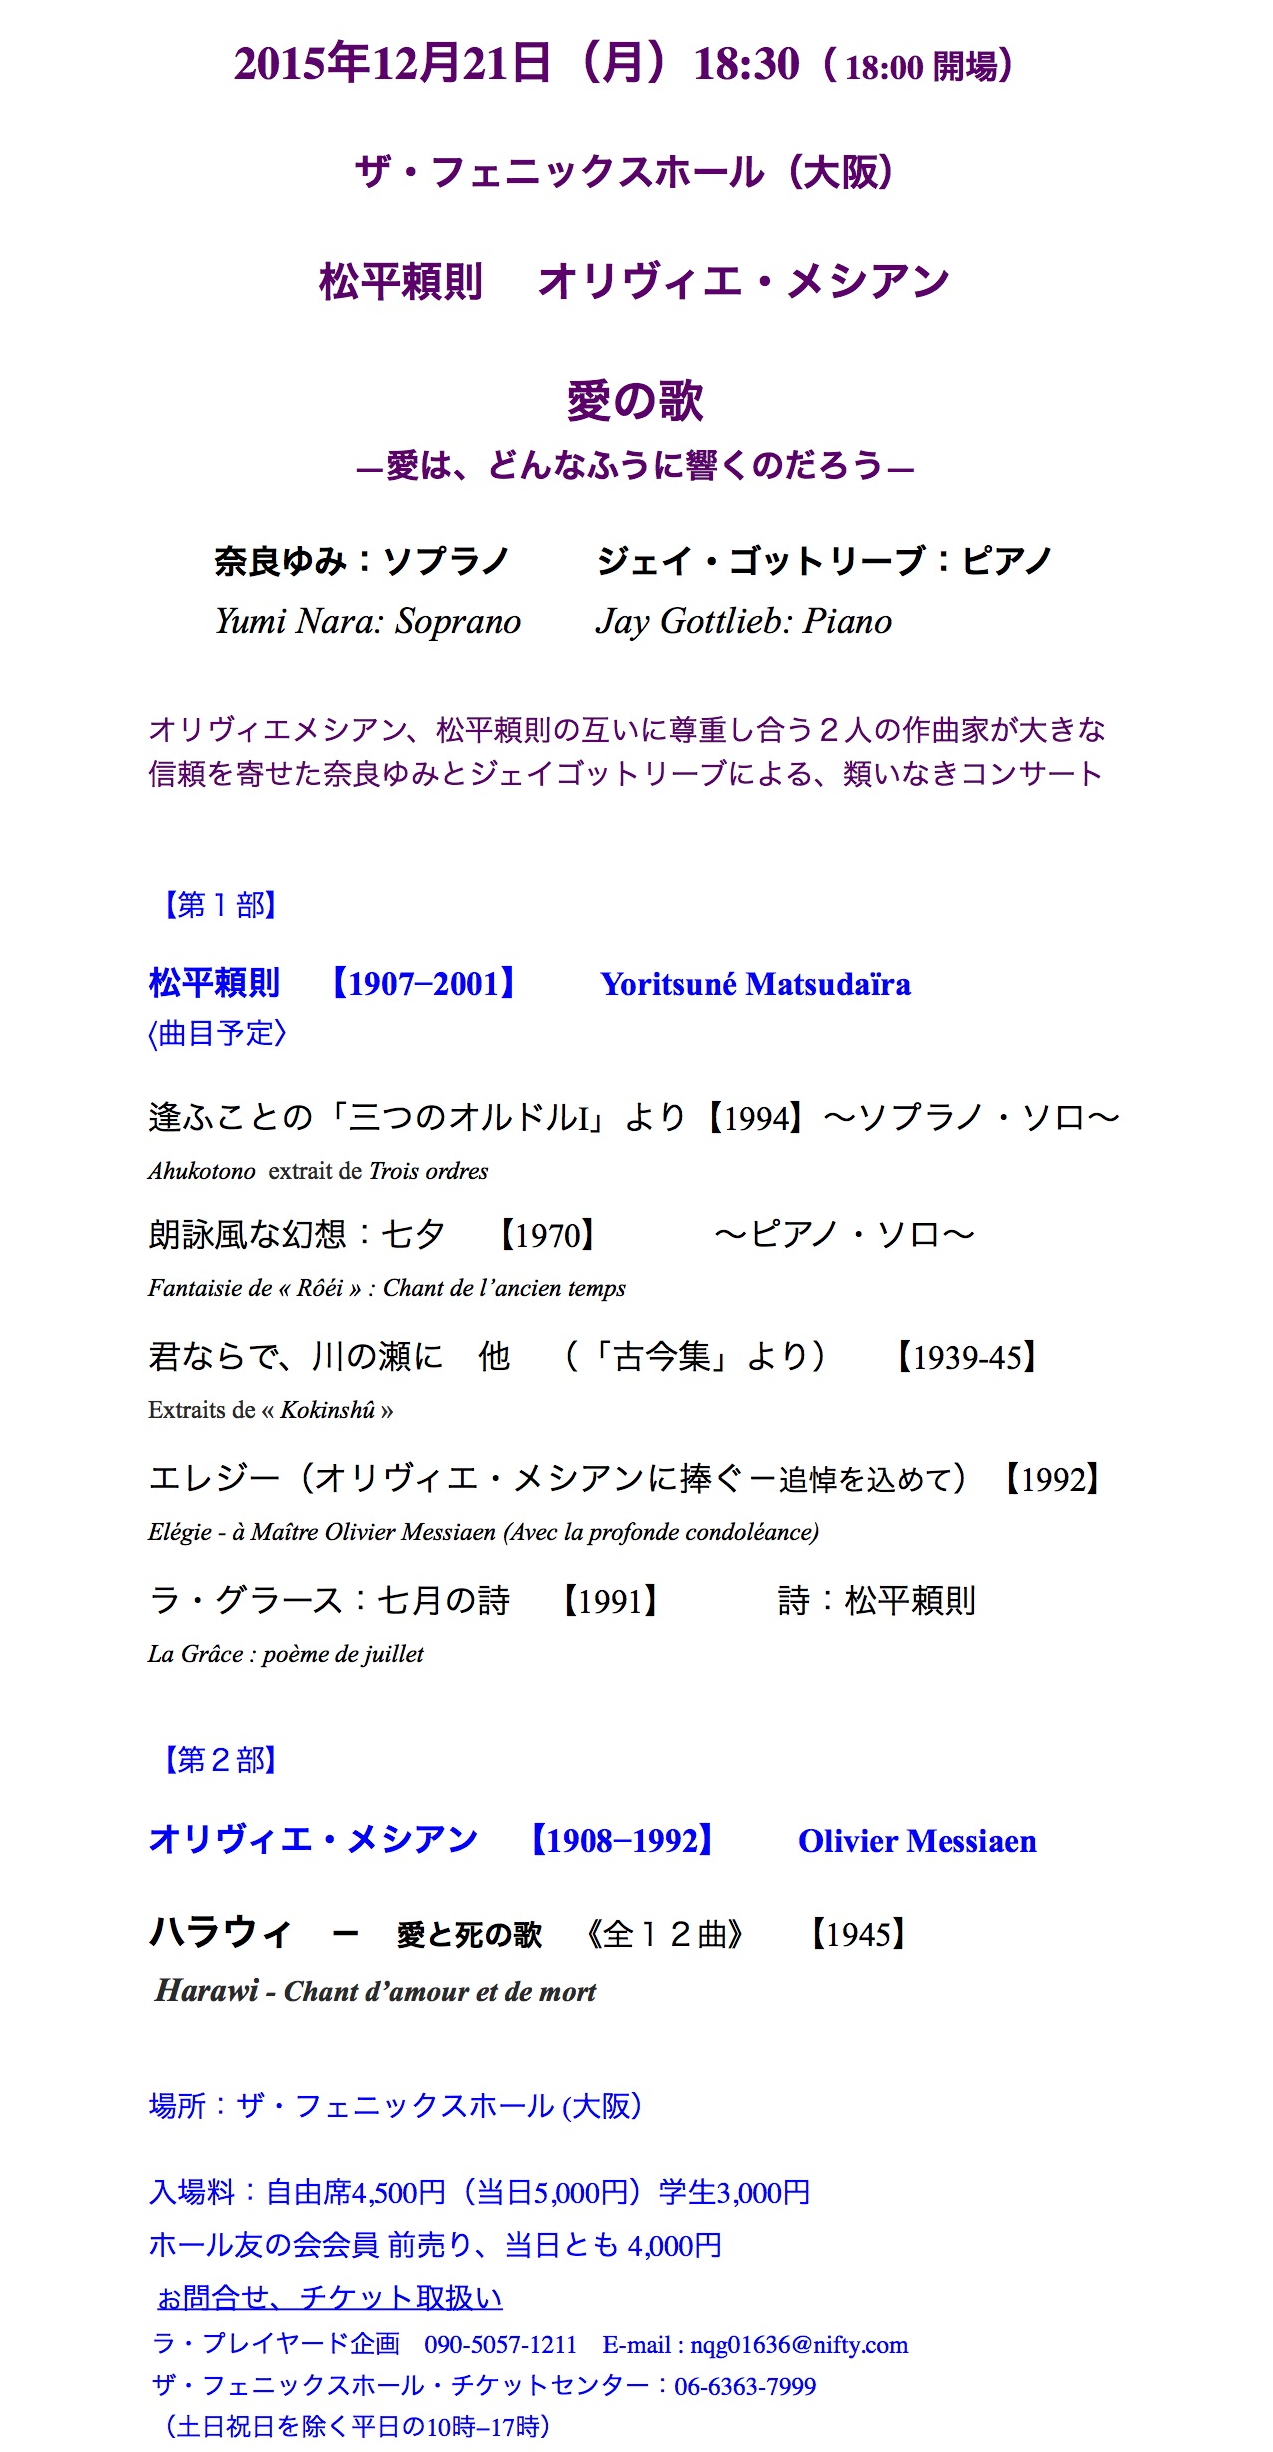 Yumi Nara official website